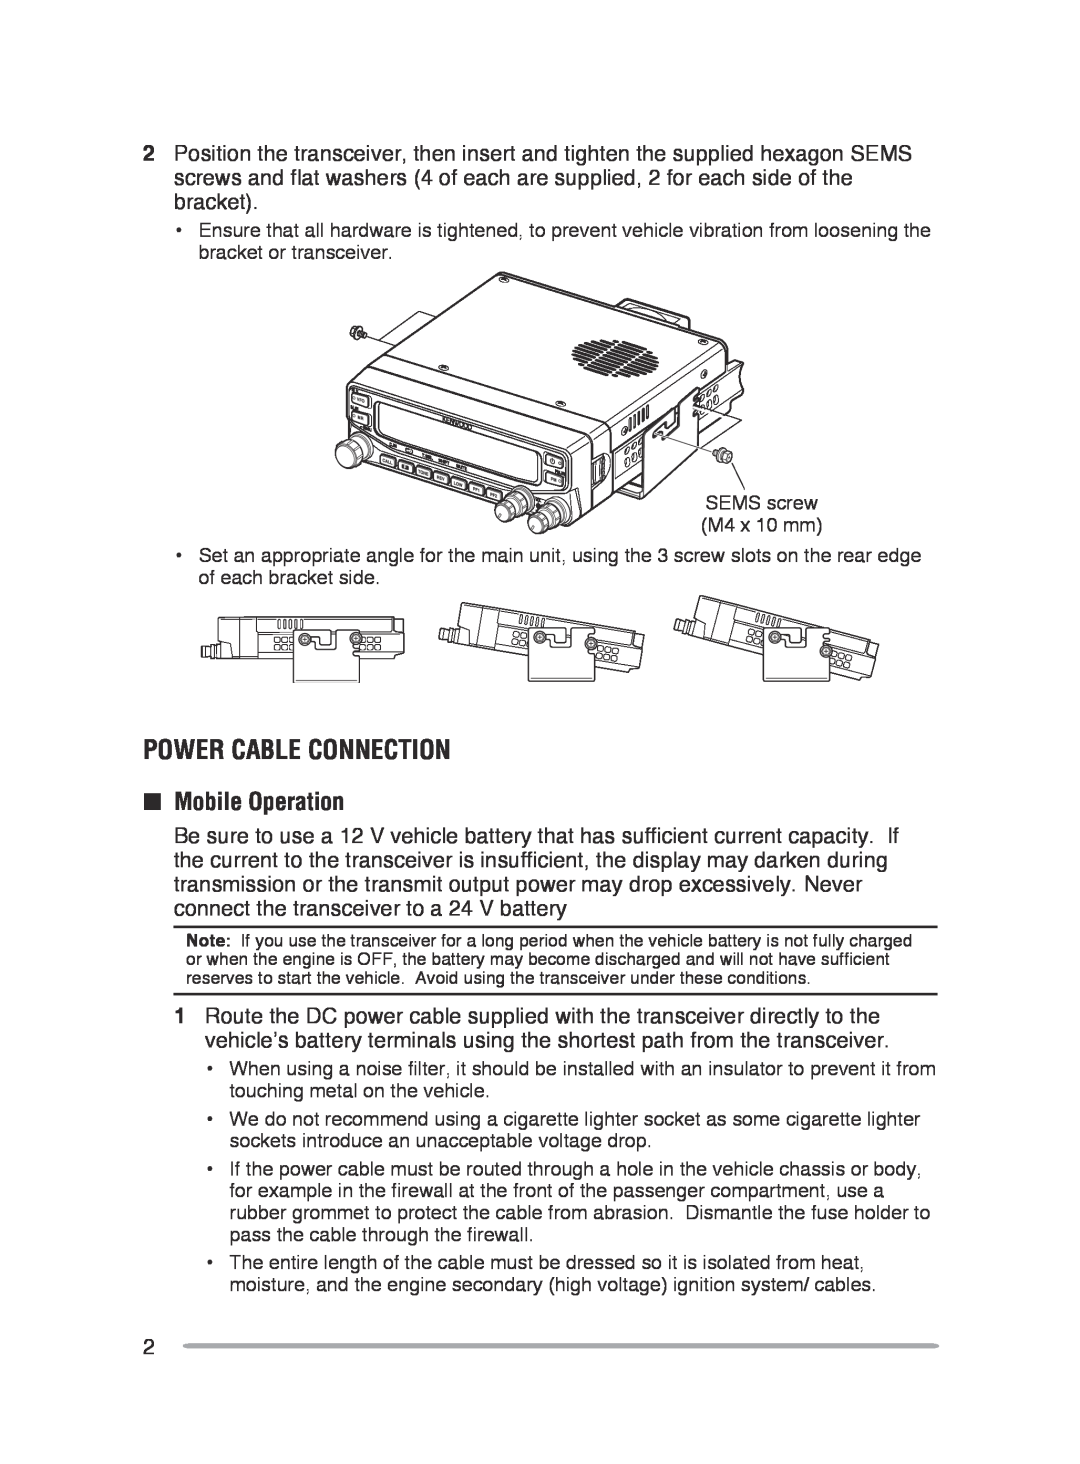 Kenwood TM-V71E, TM-V71A instruction manual Power Cable Connection, nMobile Operation 